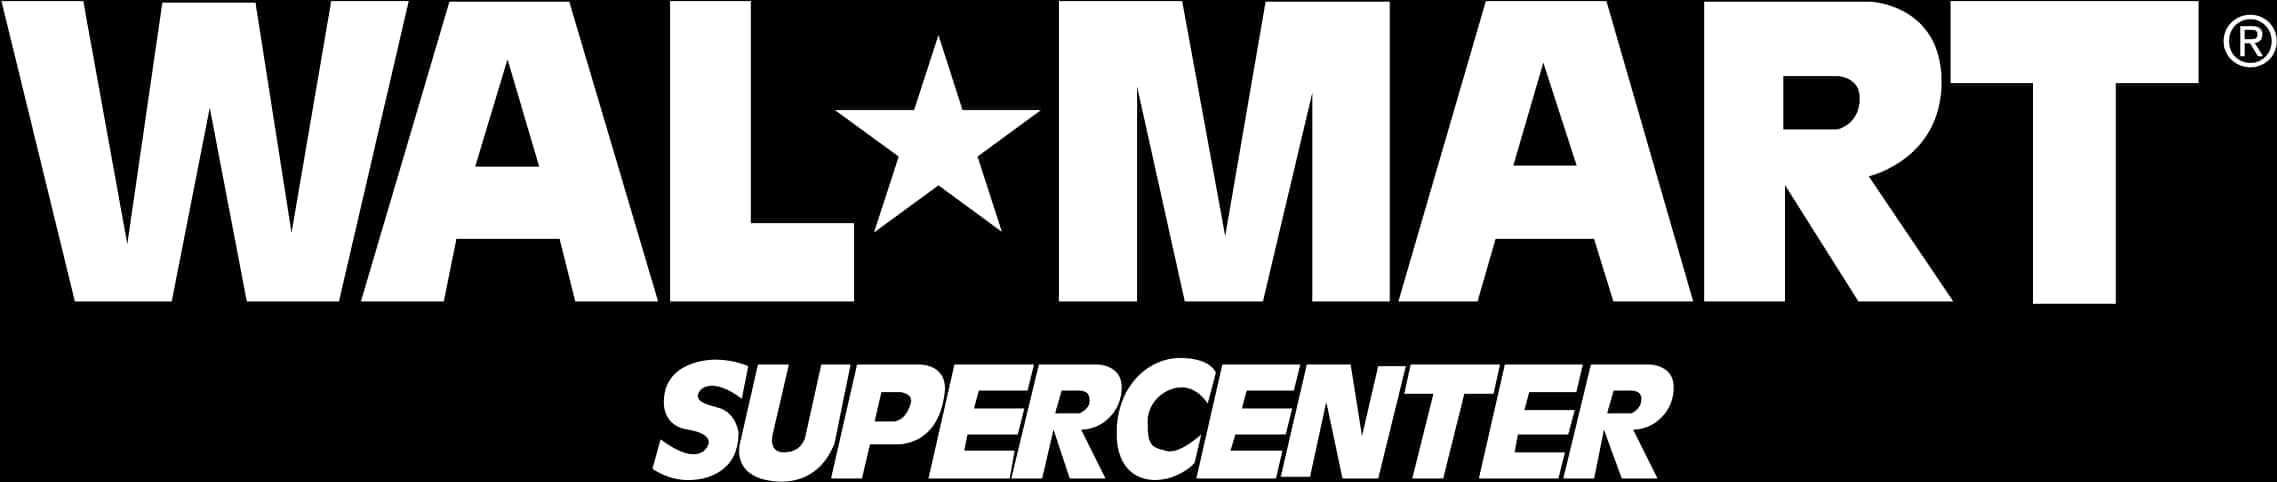 Walmart Super Center Logo